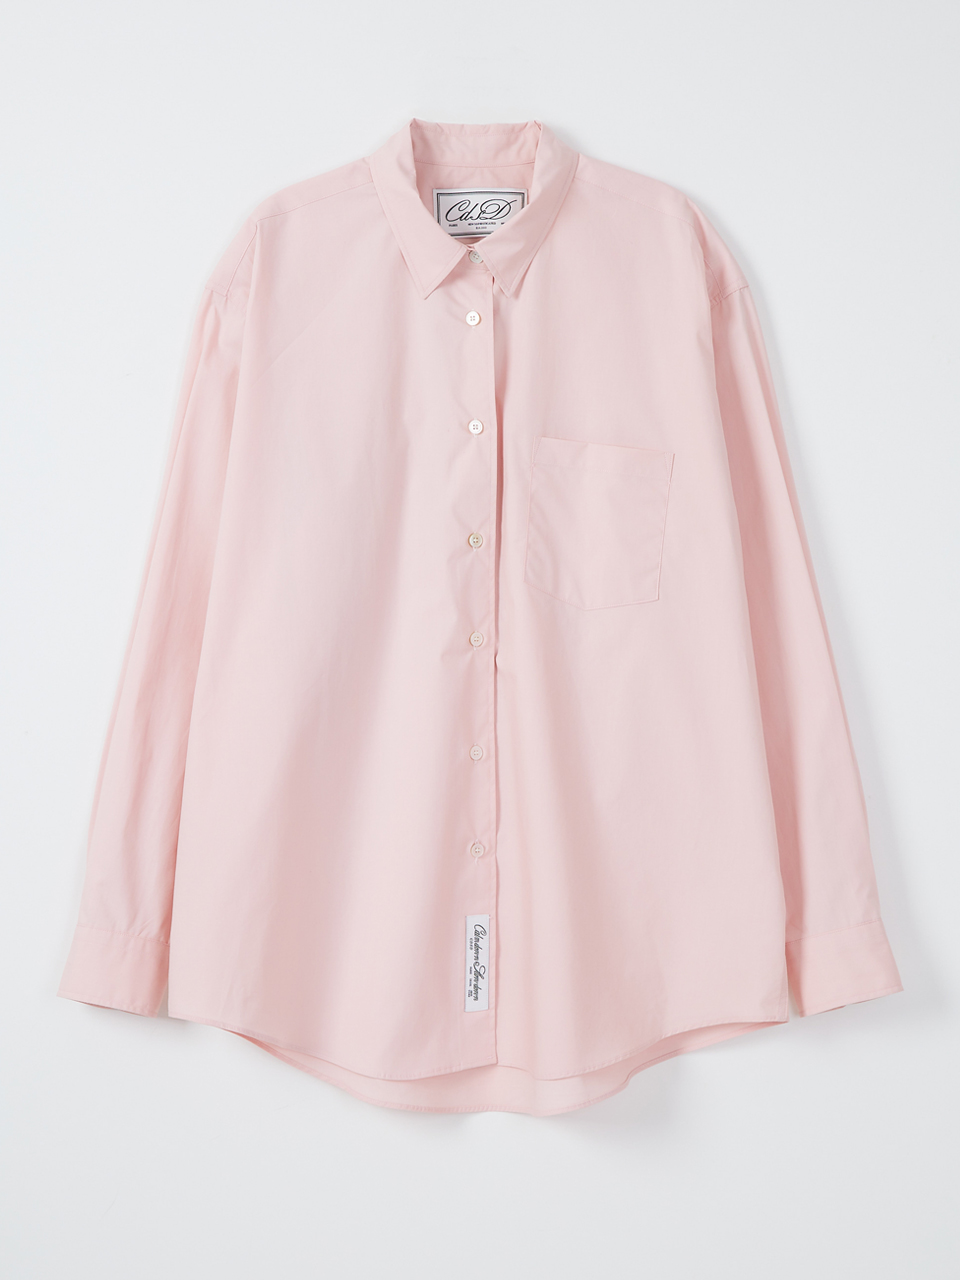 Signature oversize shirts_pink  (3월초 재입고 예정)